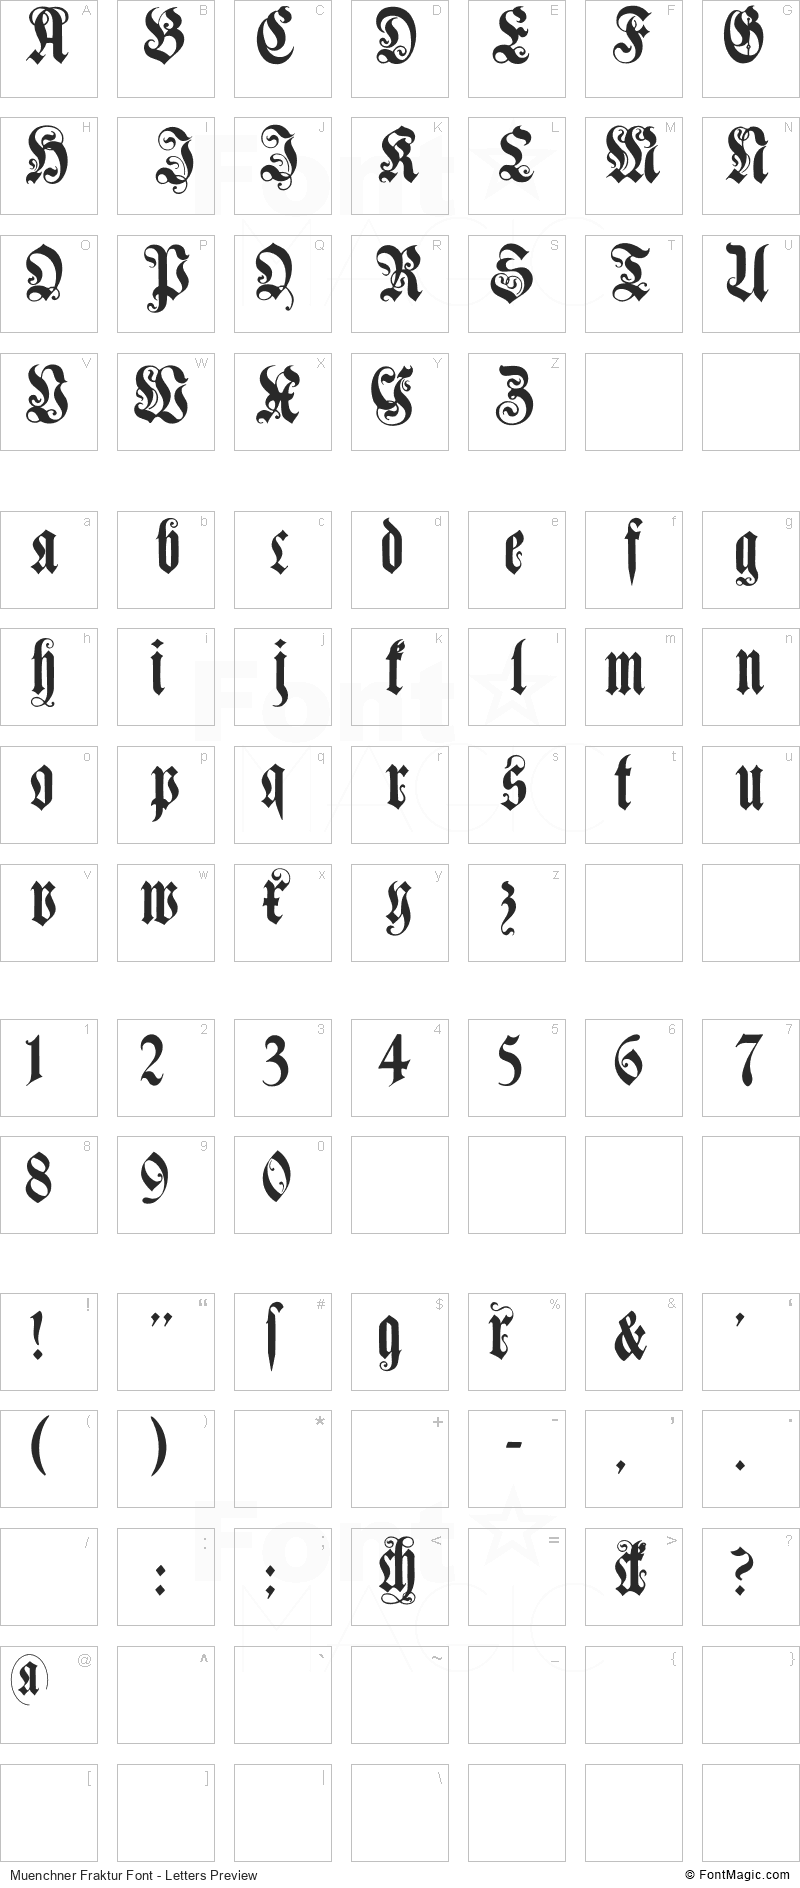 Muenchner Fraktur Font - All Latters Preview Chart